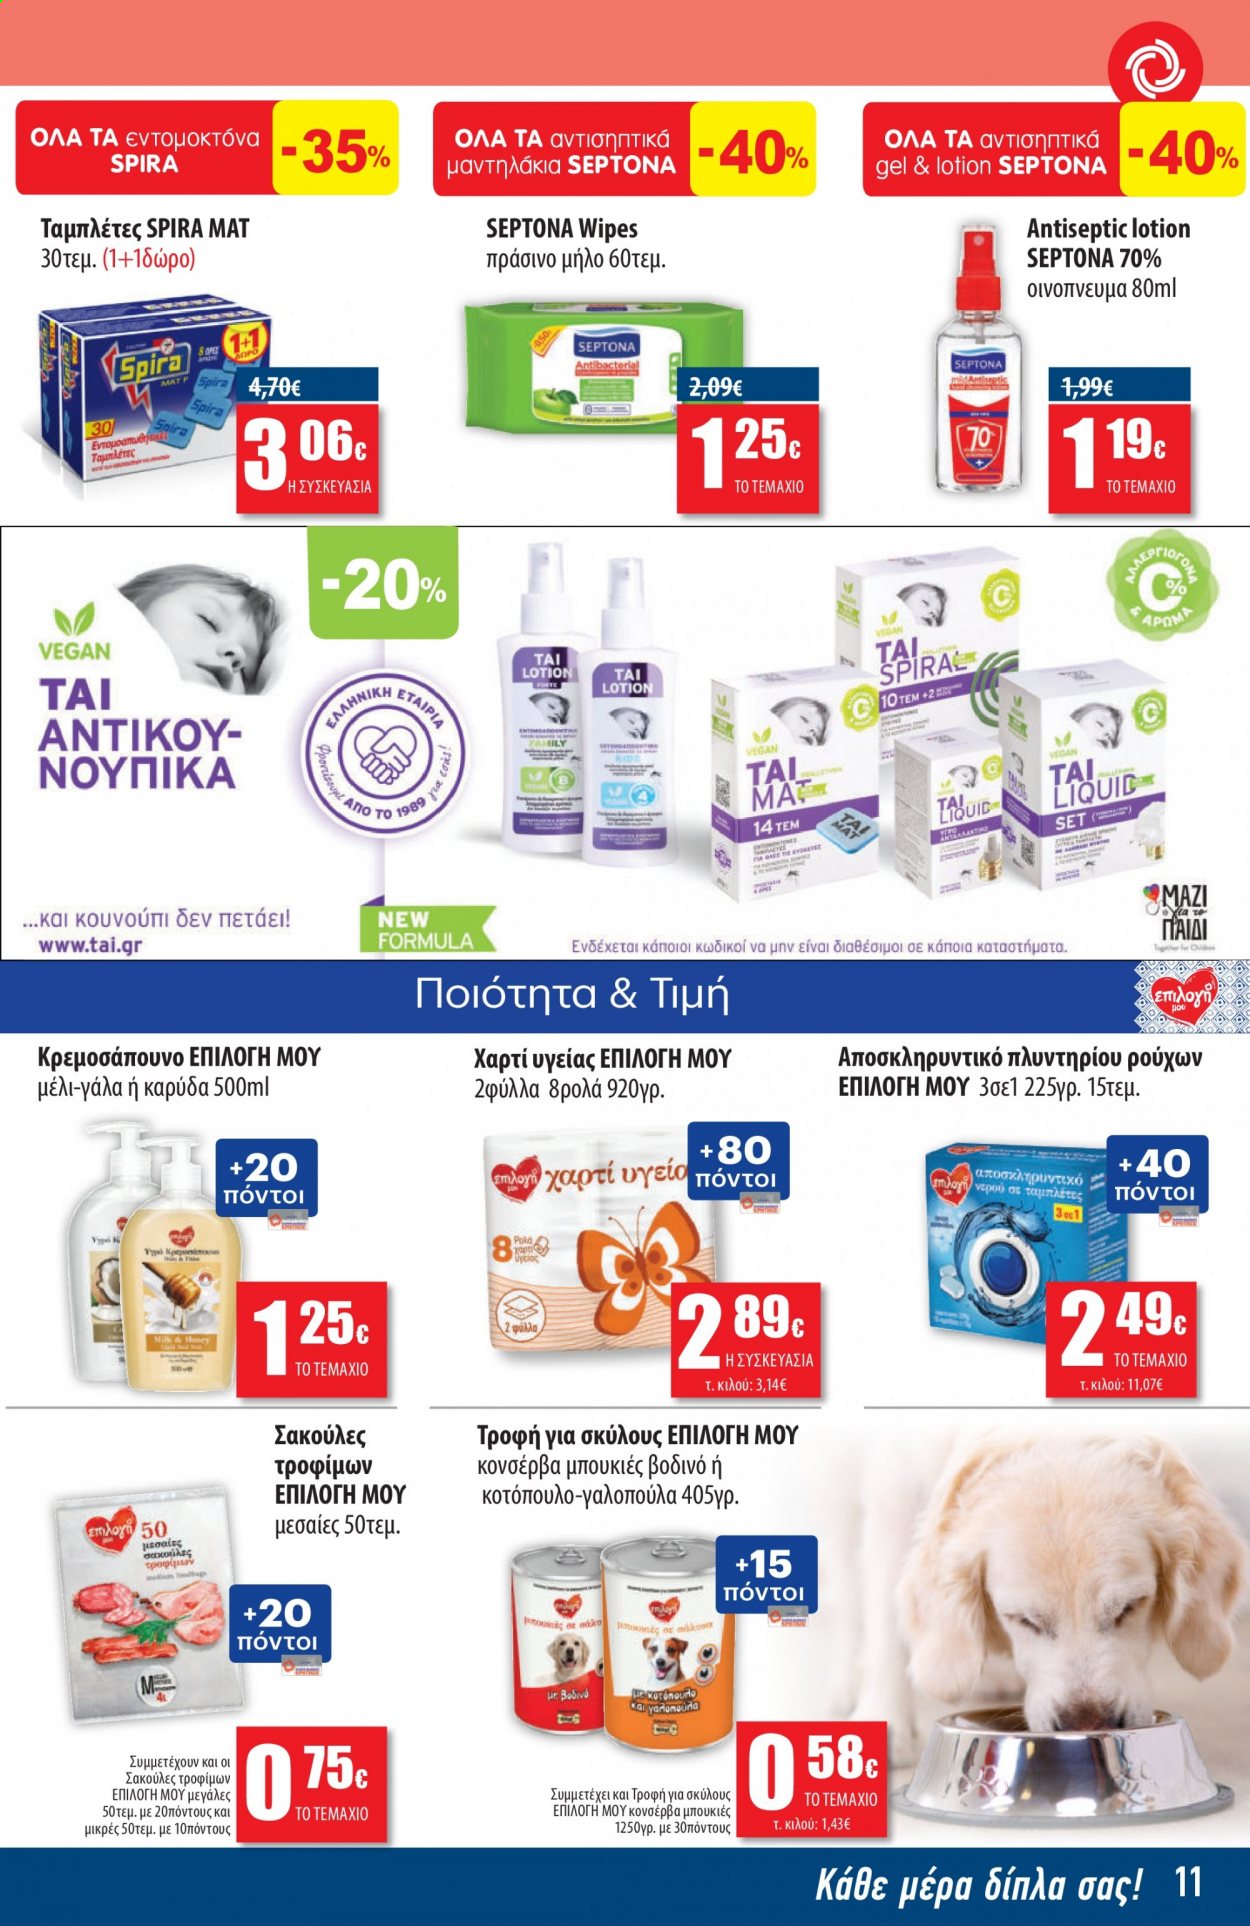 thumbnail - Φυλλάδια ΚΡΗΤΙΚΟΣ - 01.07.2021 - 14.07.2021 - Εκπτωτικά προϊόντα - γαλοπούλα, κοτόπουλο, γάλα, μέλι, χαρτί υγείας, αντισηπτικά μαντηλάκια, τροφή για σκύλους. Σελίδα 11.